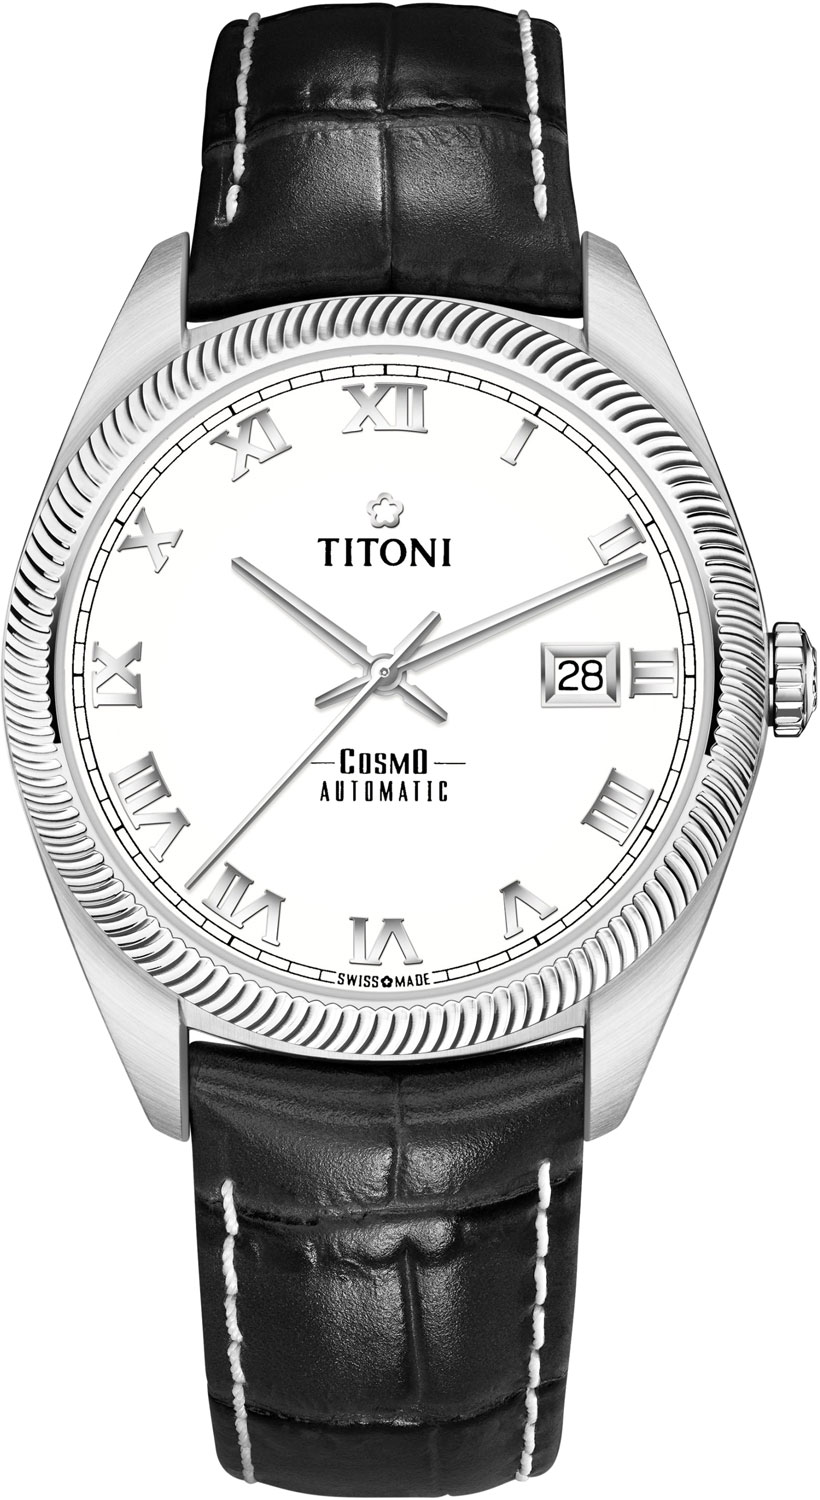 Titoni 878-S-ST-657